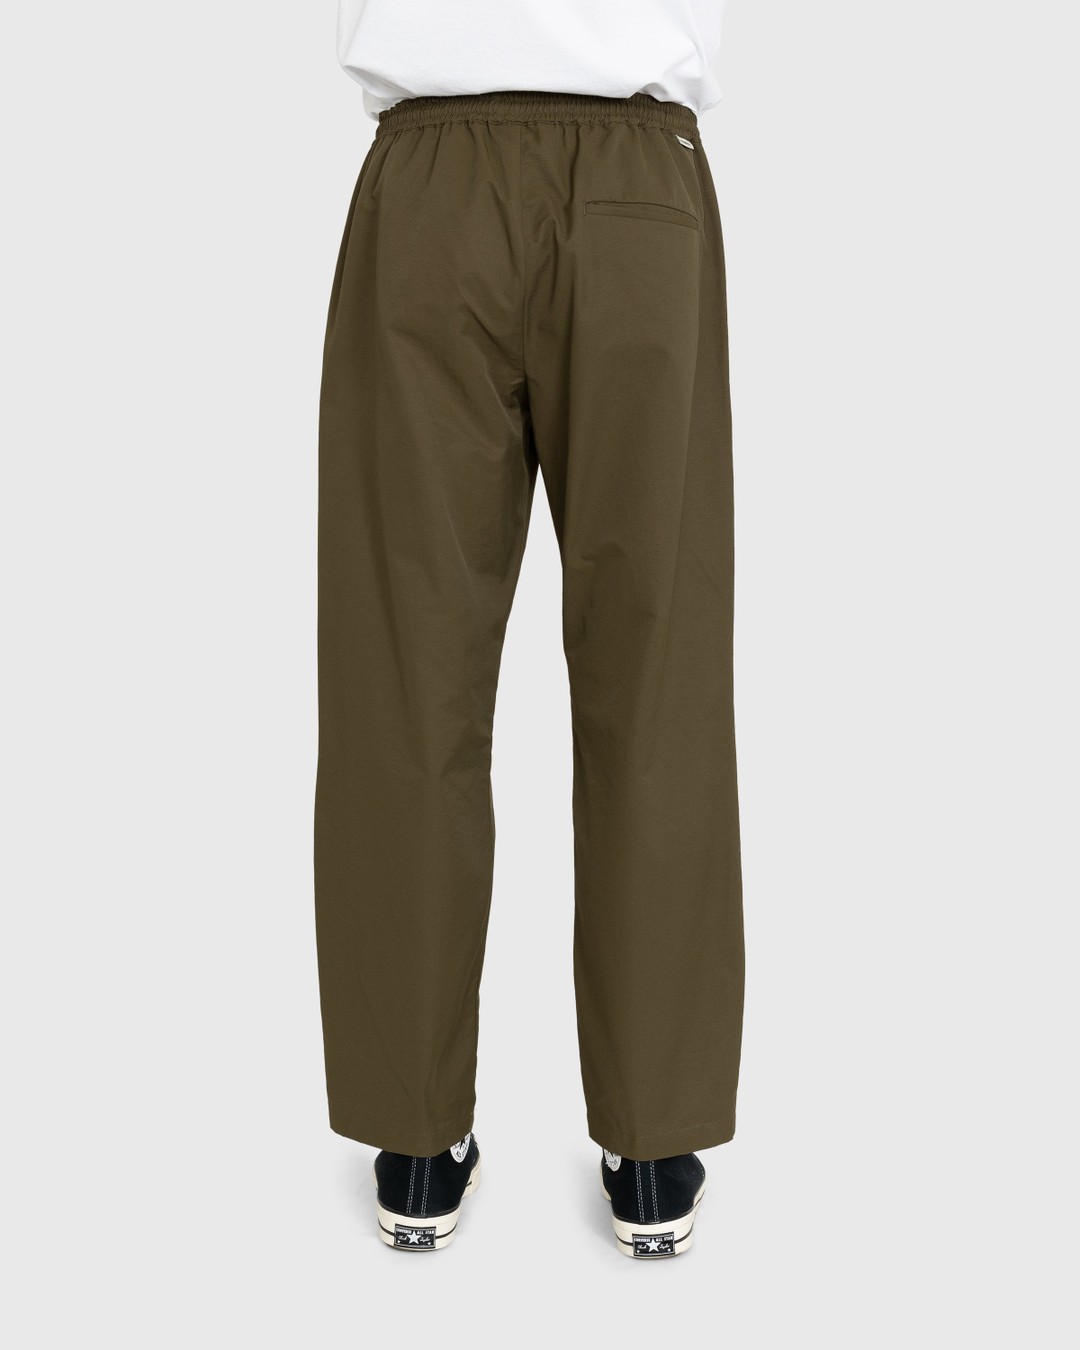 Highsnobiety – Cotton Nylon Elastic Pants Olive - Trousers - Green - Image 4